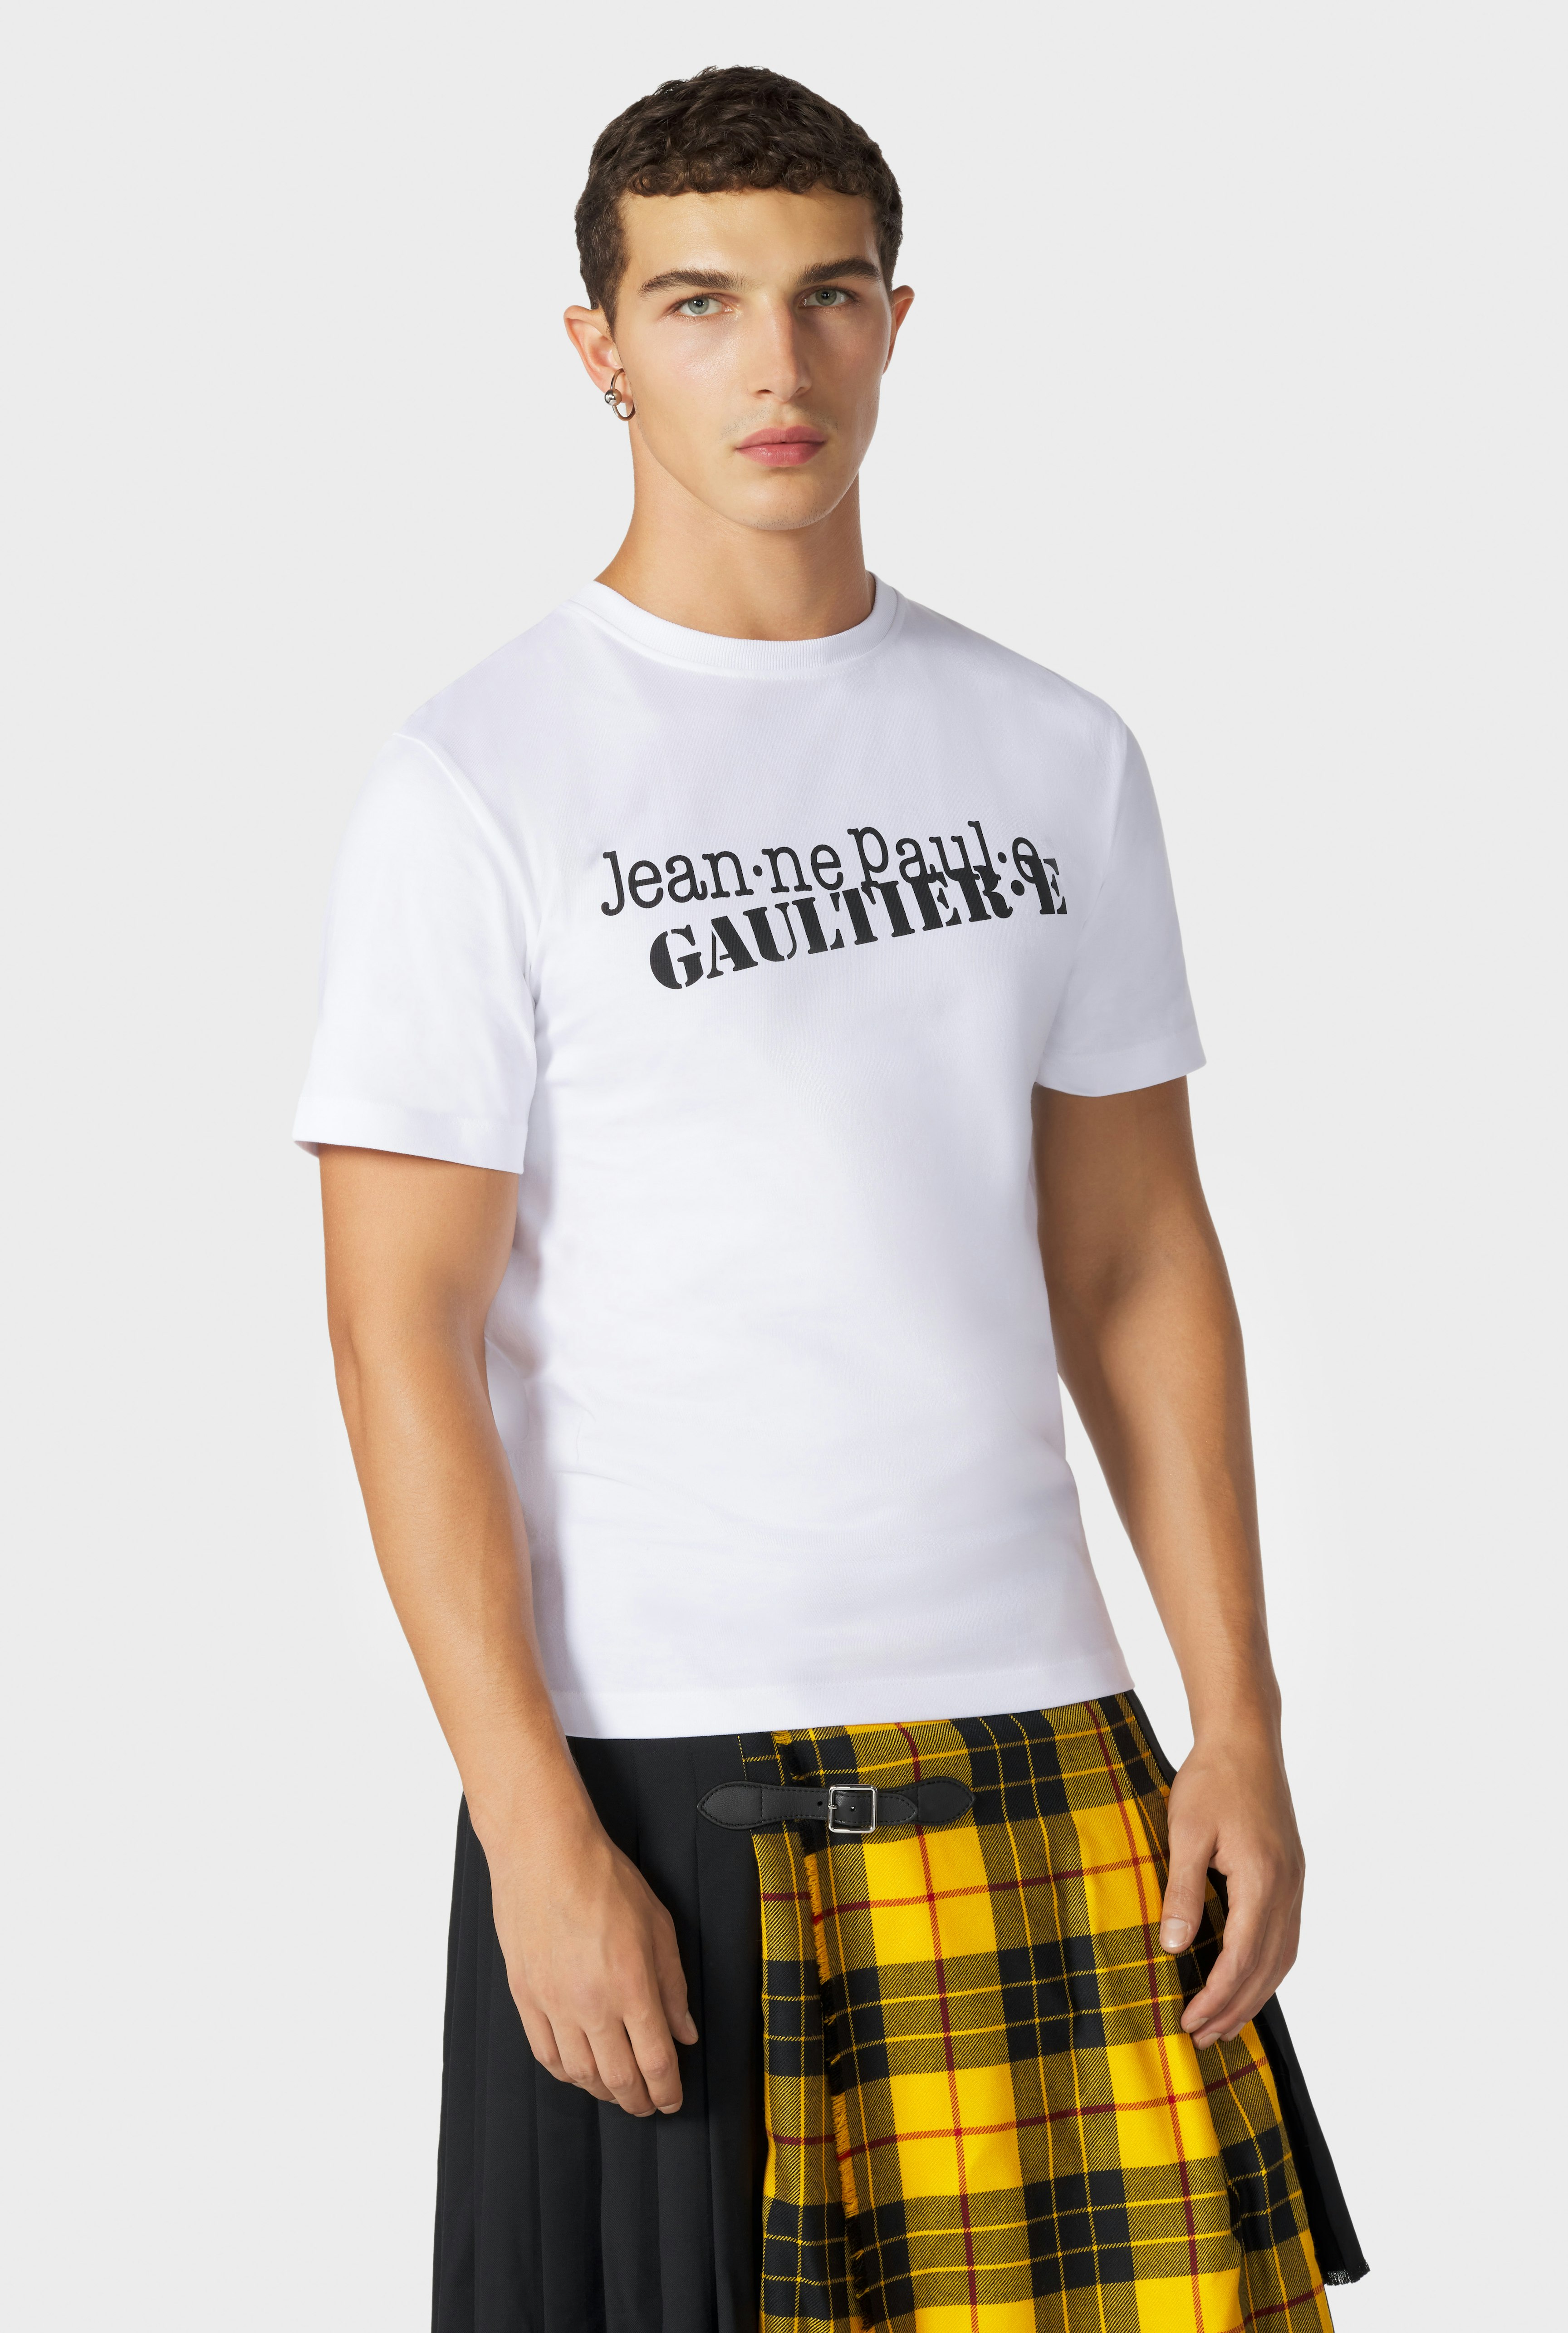 Pride - The Jean.ne Paul.e Gaultier.e T-shirt Jean Paul Gaultier